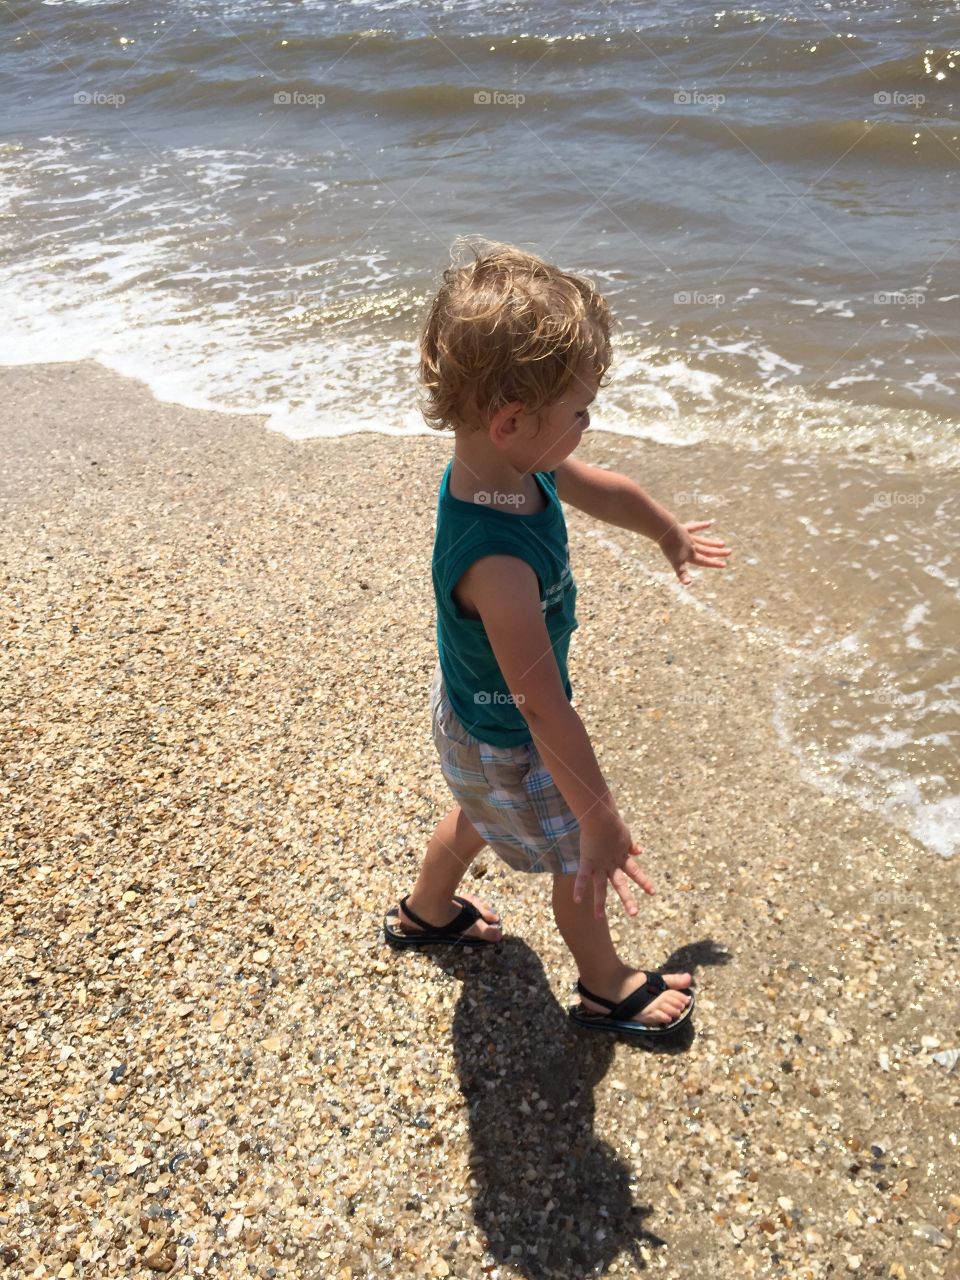 My nephew on the beach